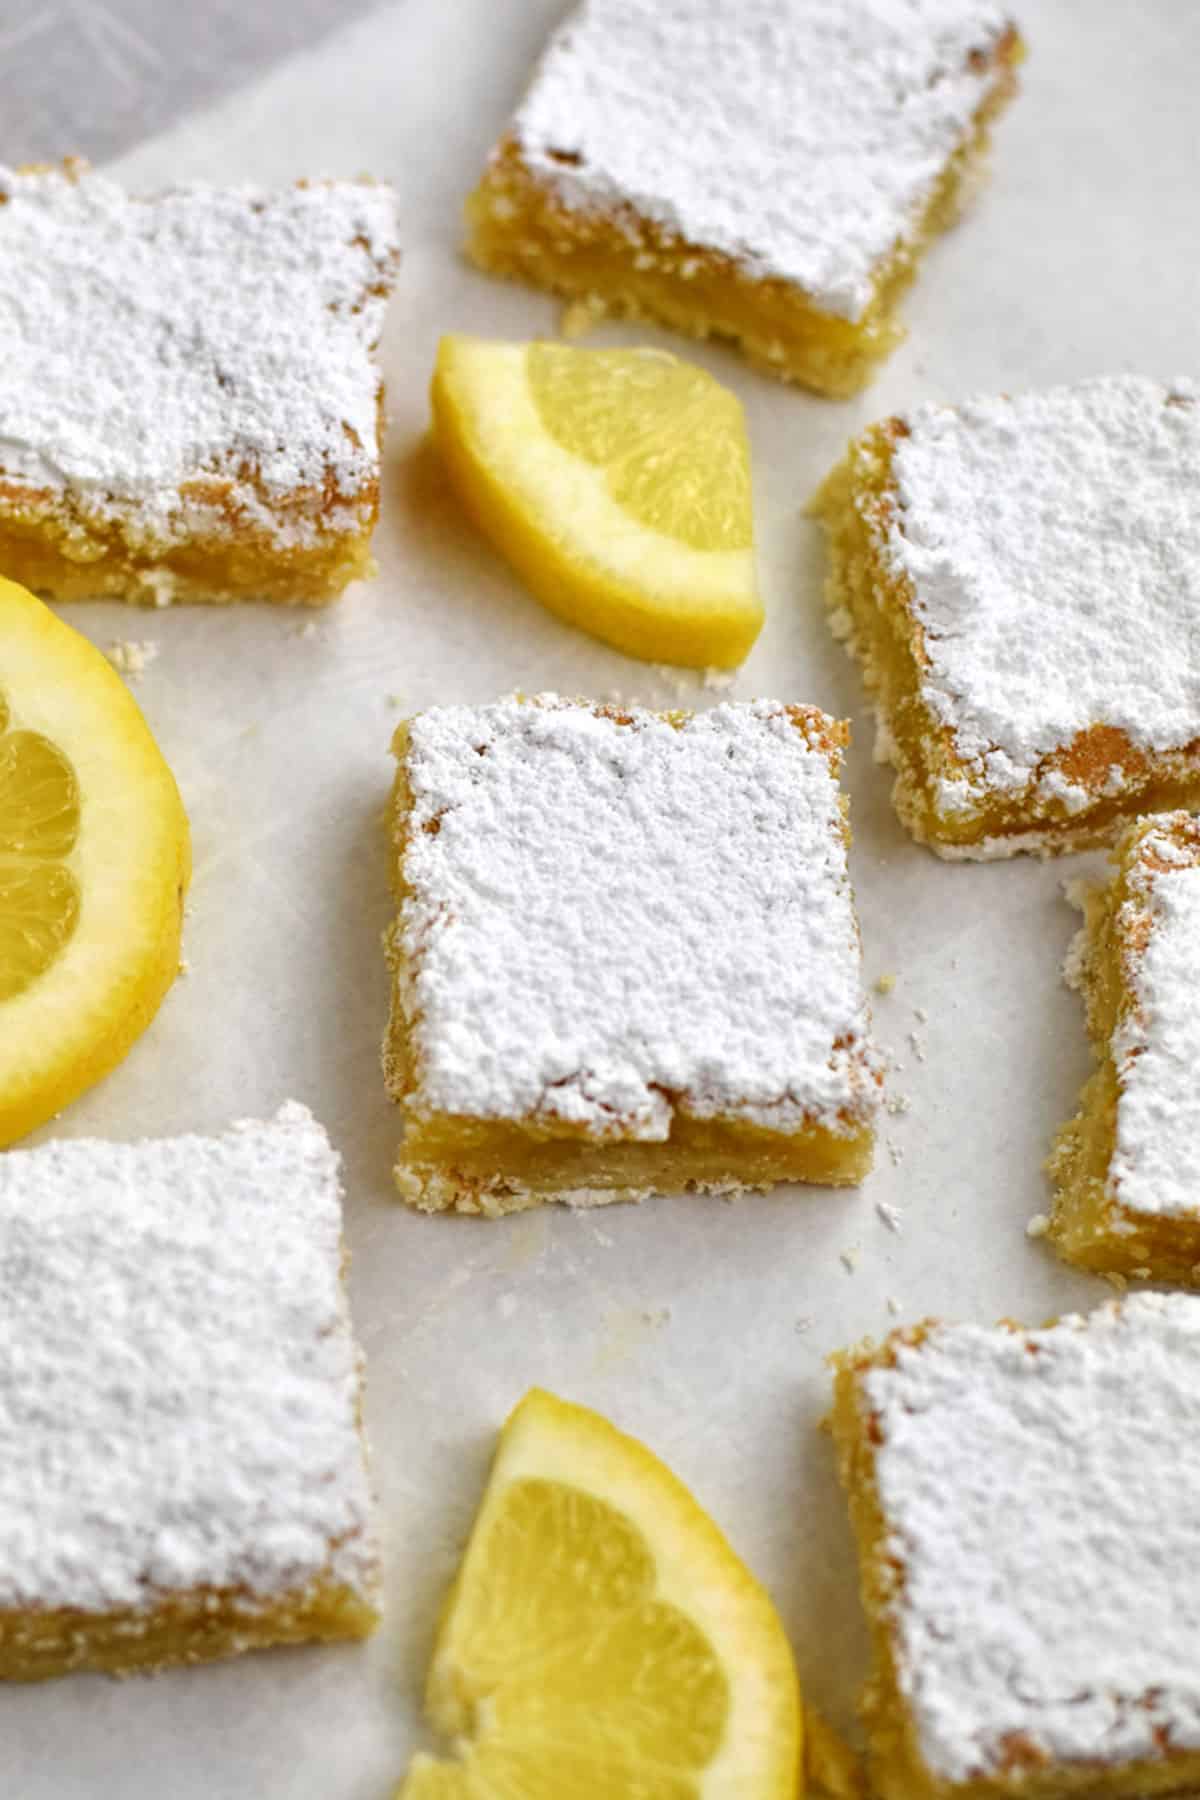 Gluten free lemon bars and lemon slices scattered on parchment paper.